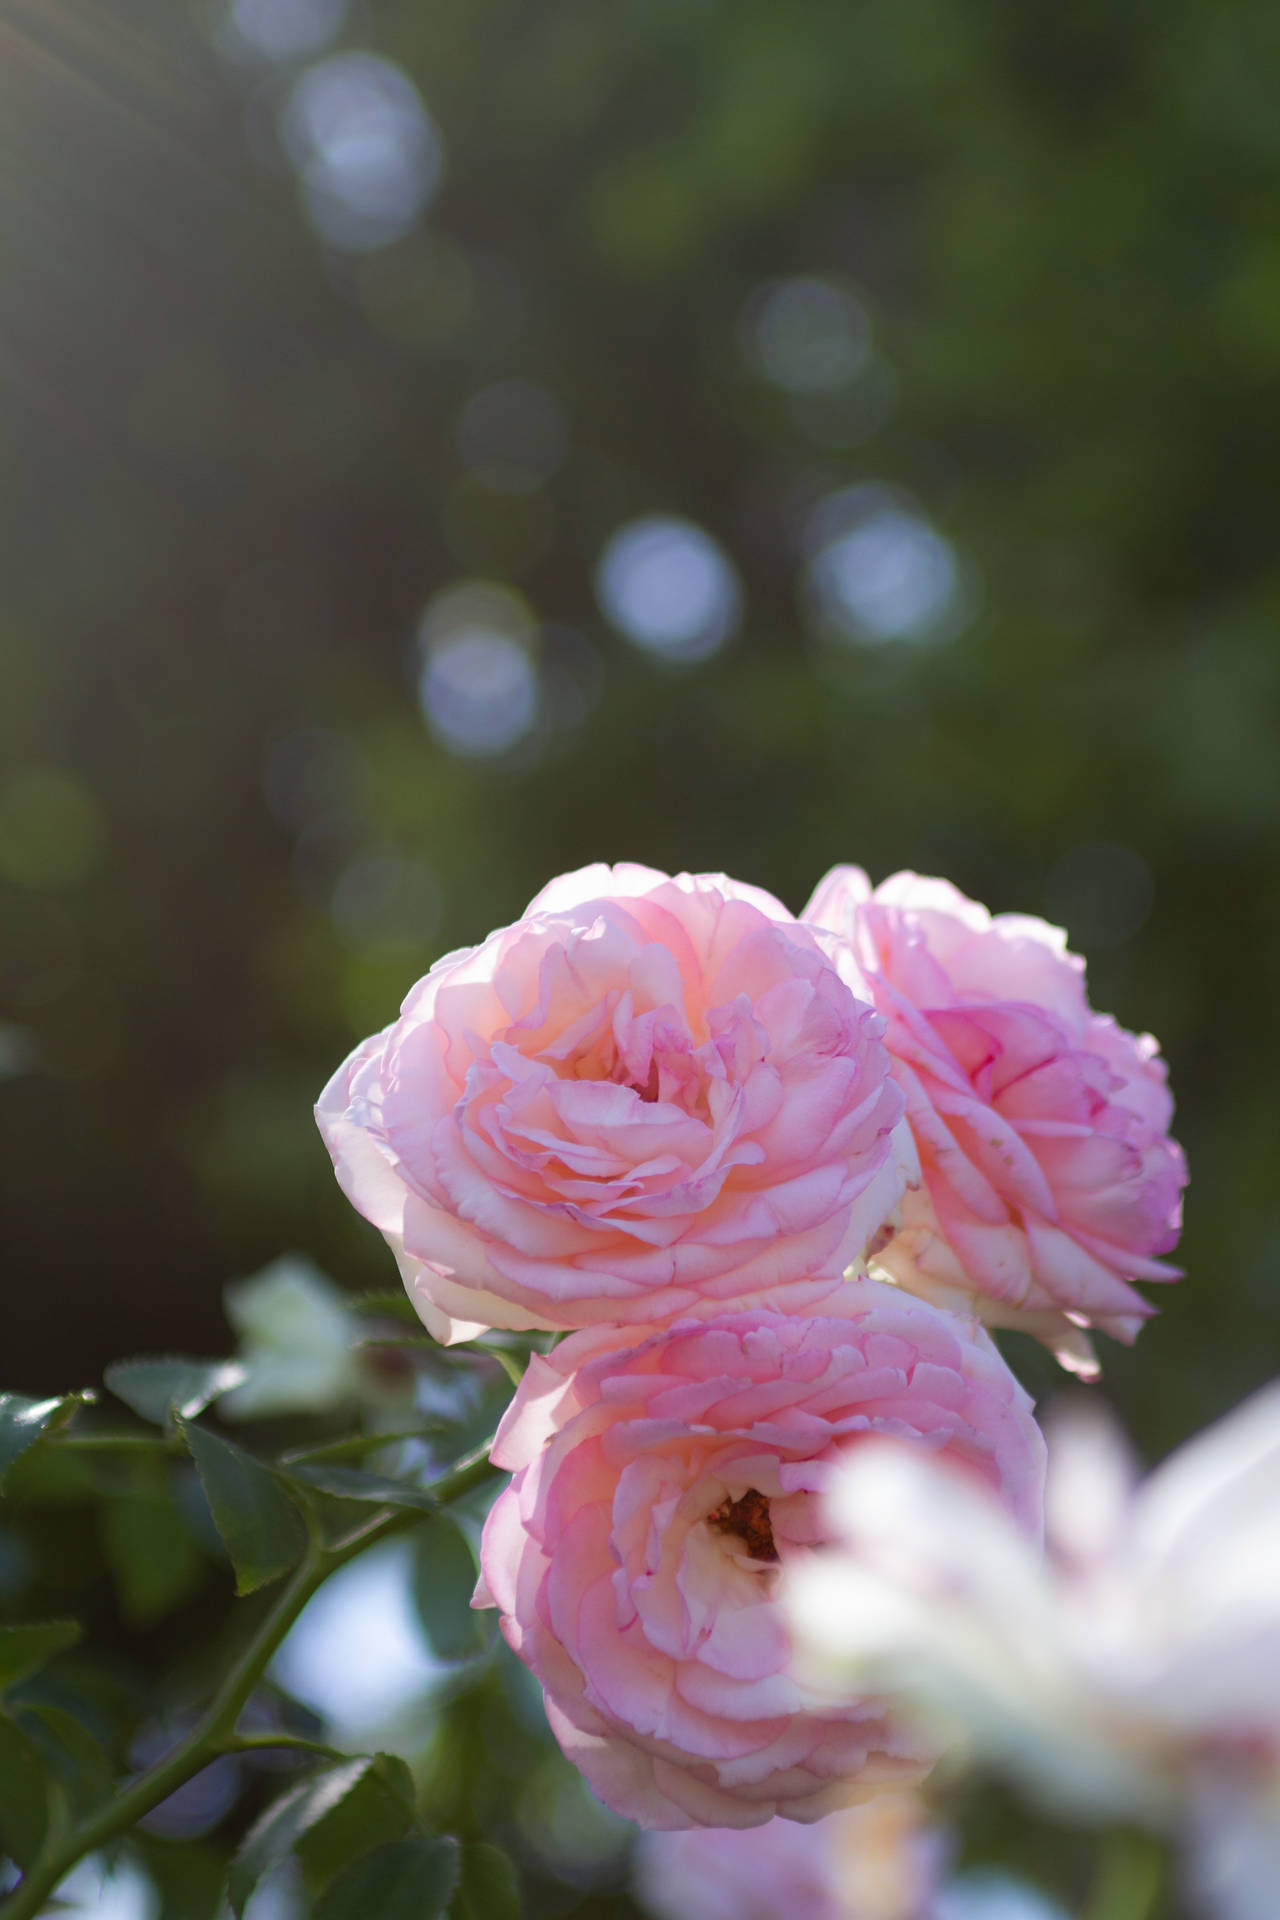 Aesthetic Rose Blooming During Daytime Wallpaper